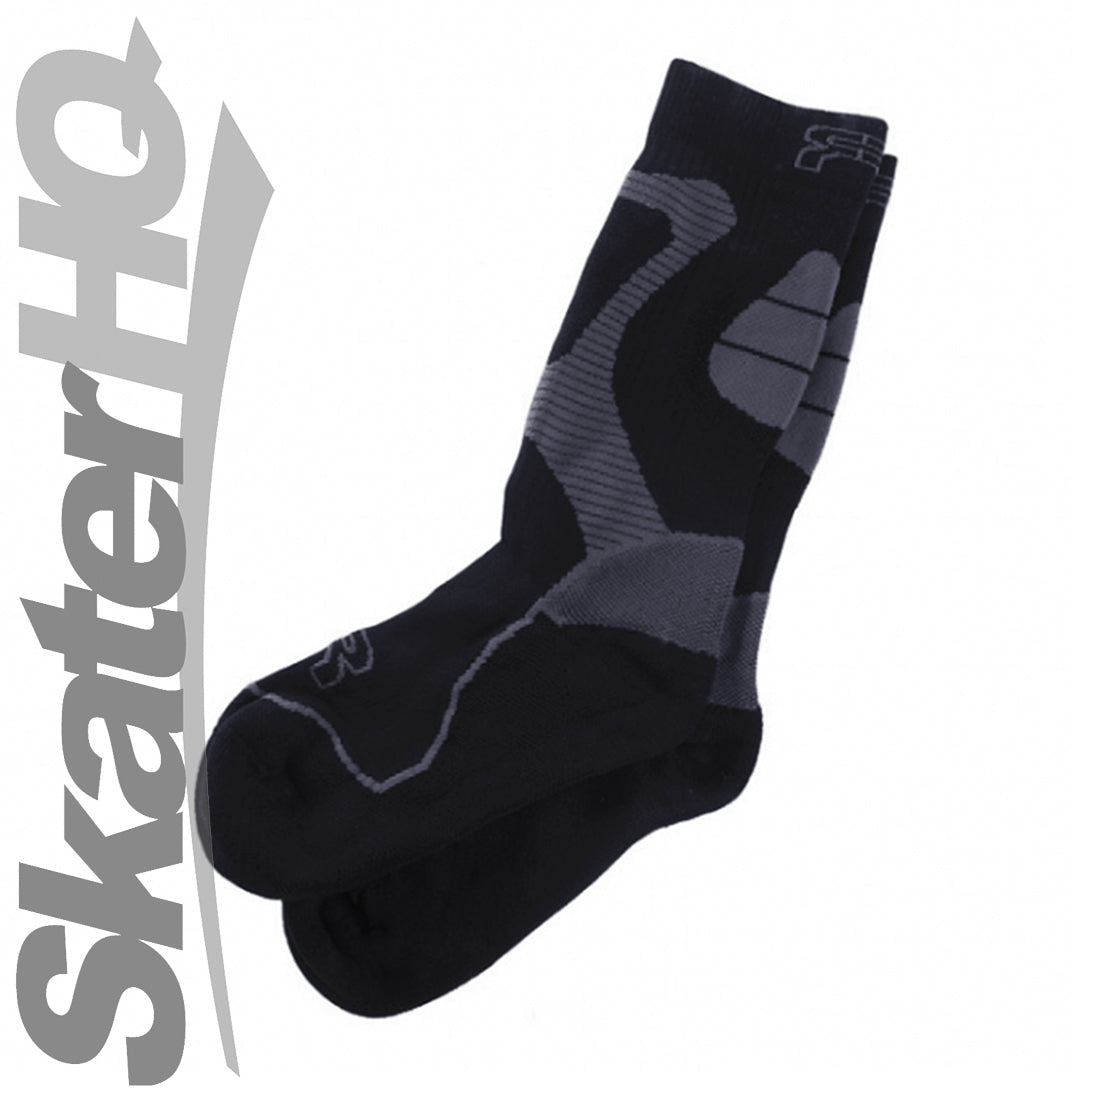 FR Nano Sport Socks Black - Medium - EU39-41 Apparel Socks